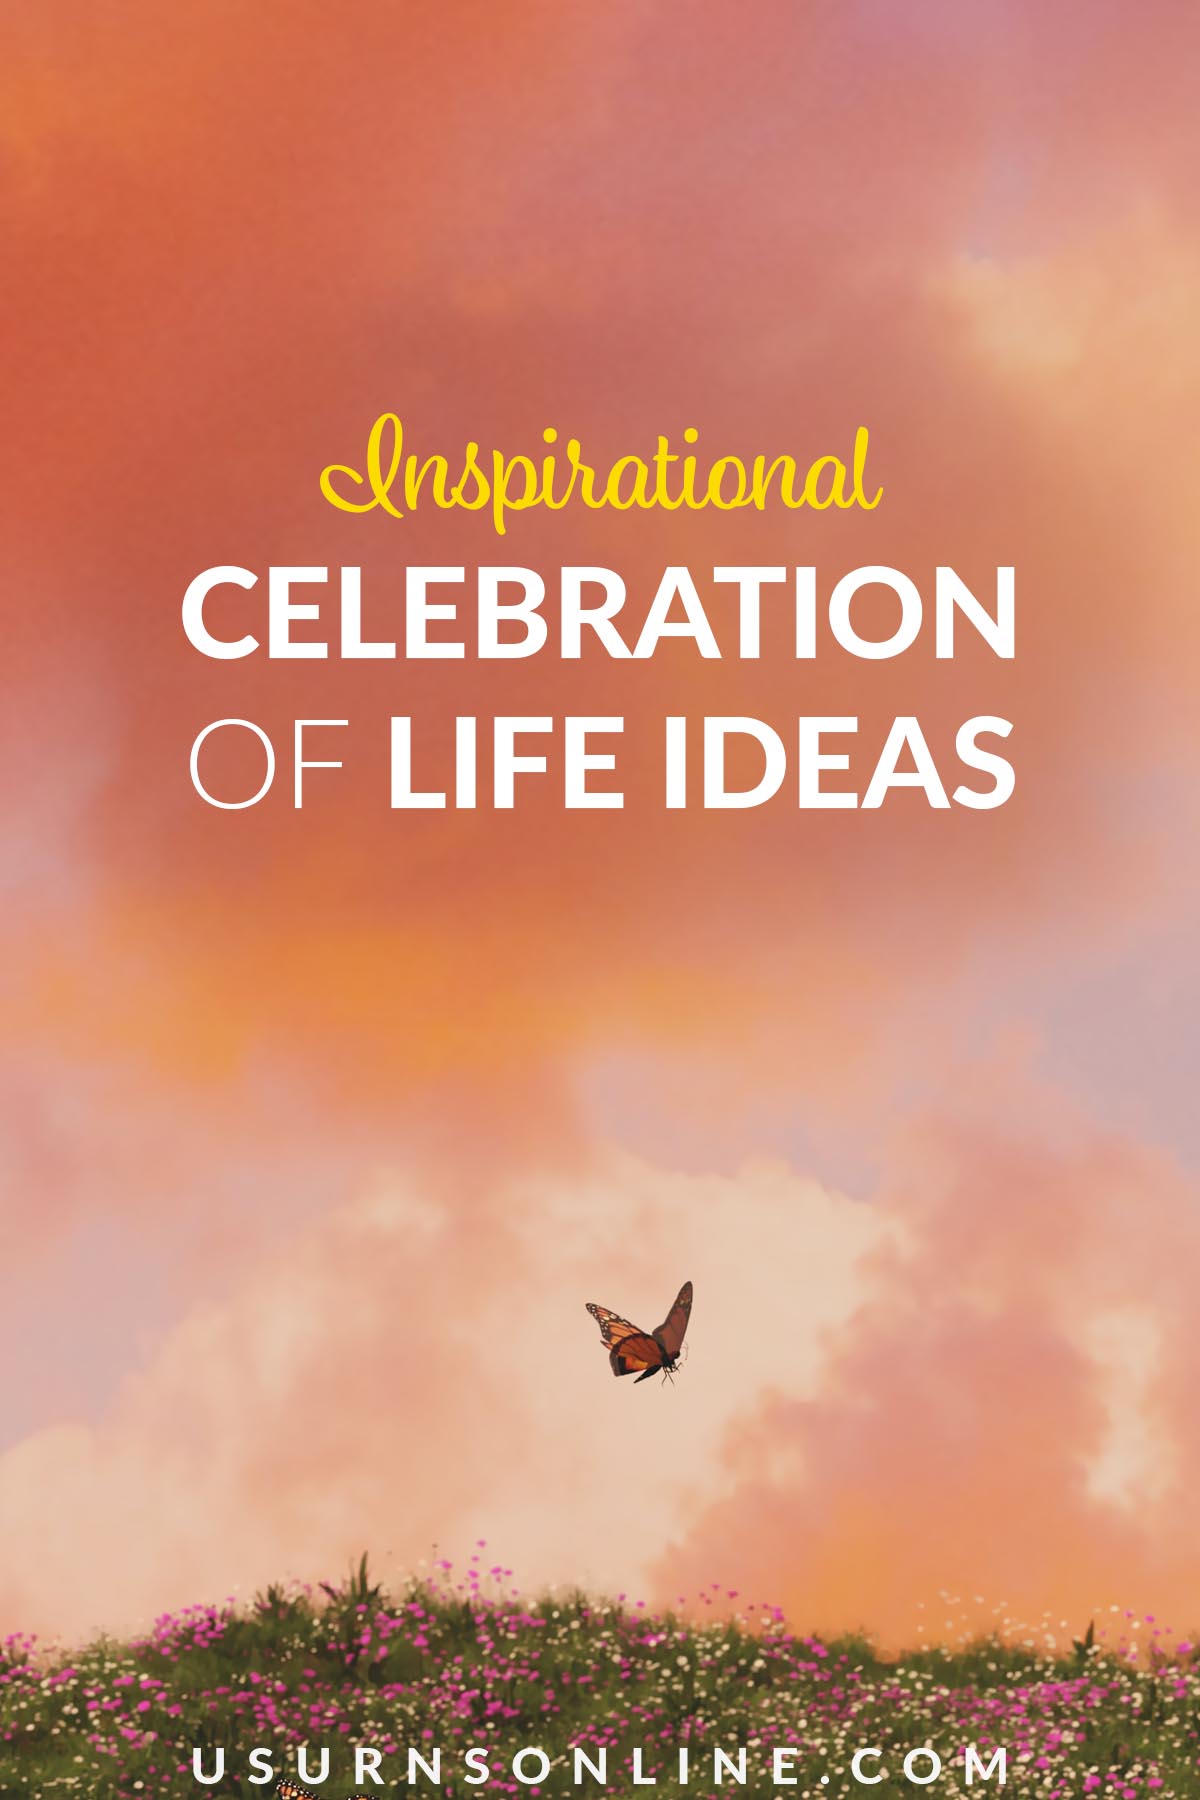 celebration of life ideas - feature image